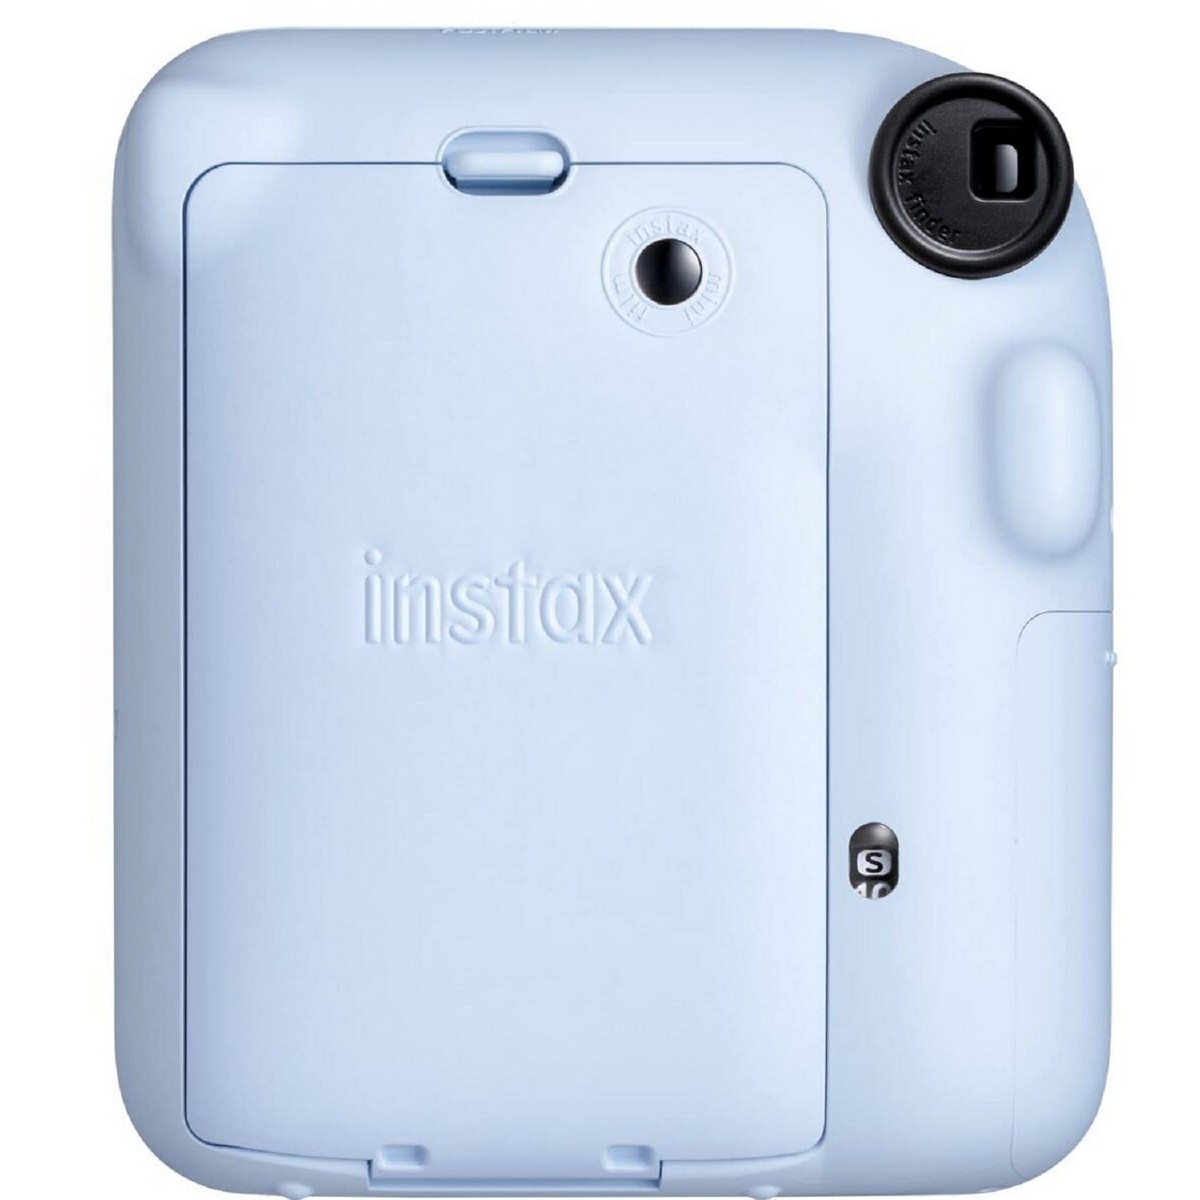 Fujifilm Instax Mini 12 Instant Camera Pastel Blue